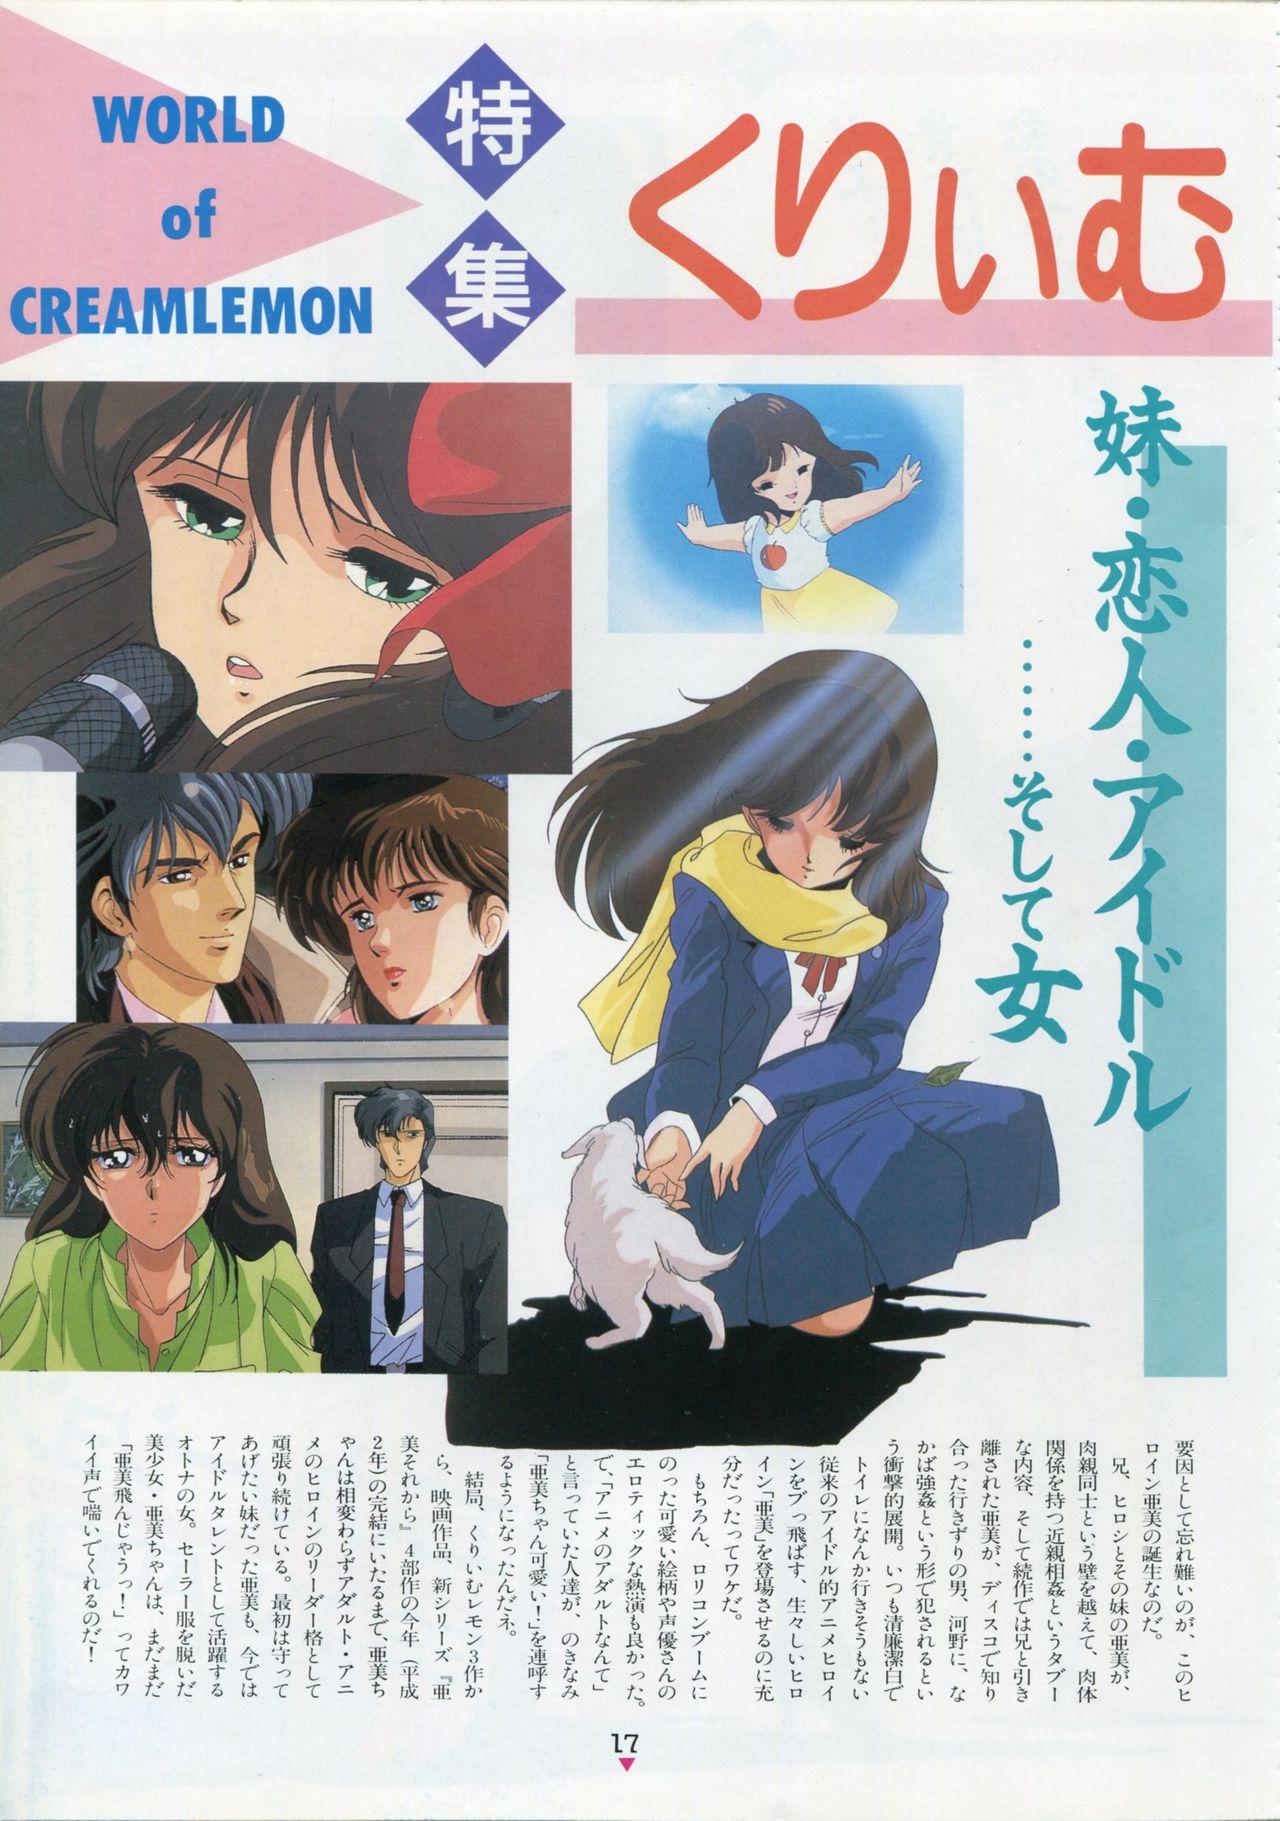 Bishoujo Anime Daizenshuu - Adult Animation Video Catalog 1991 12